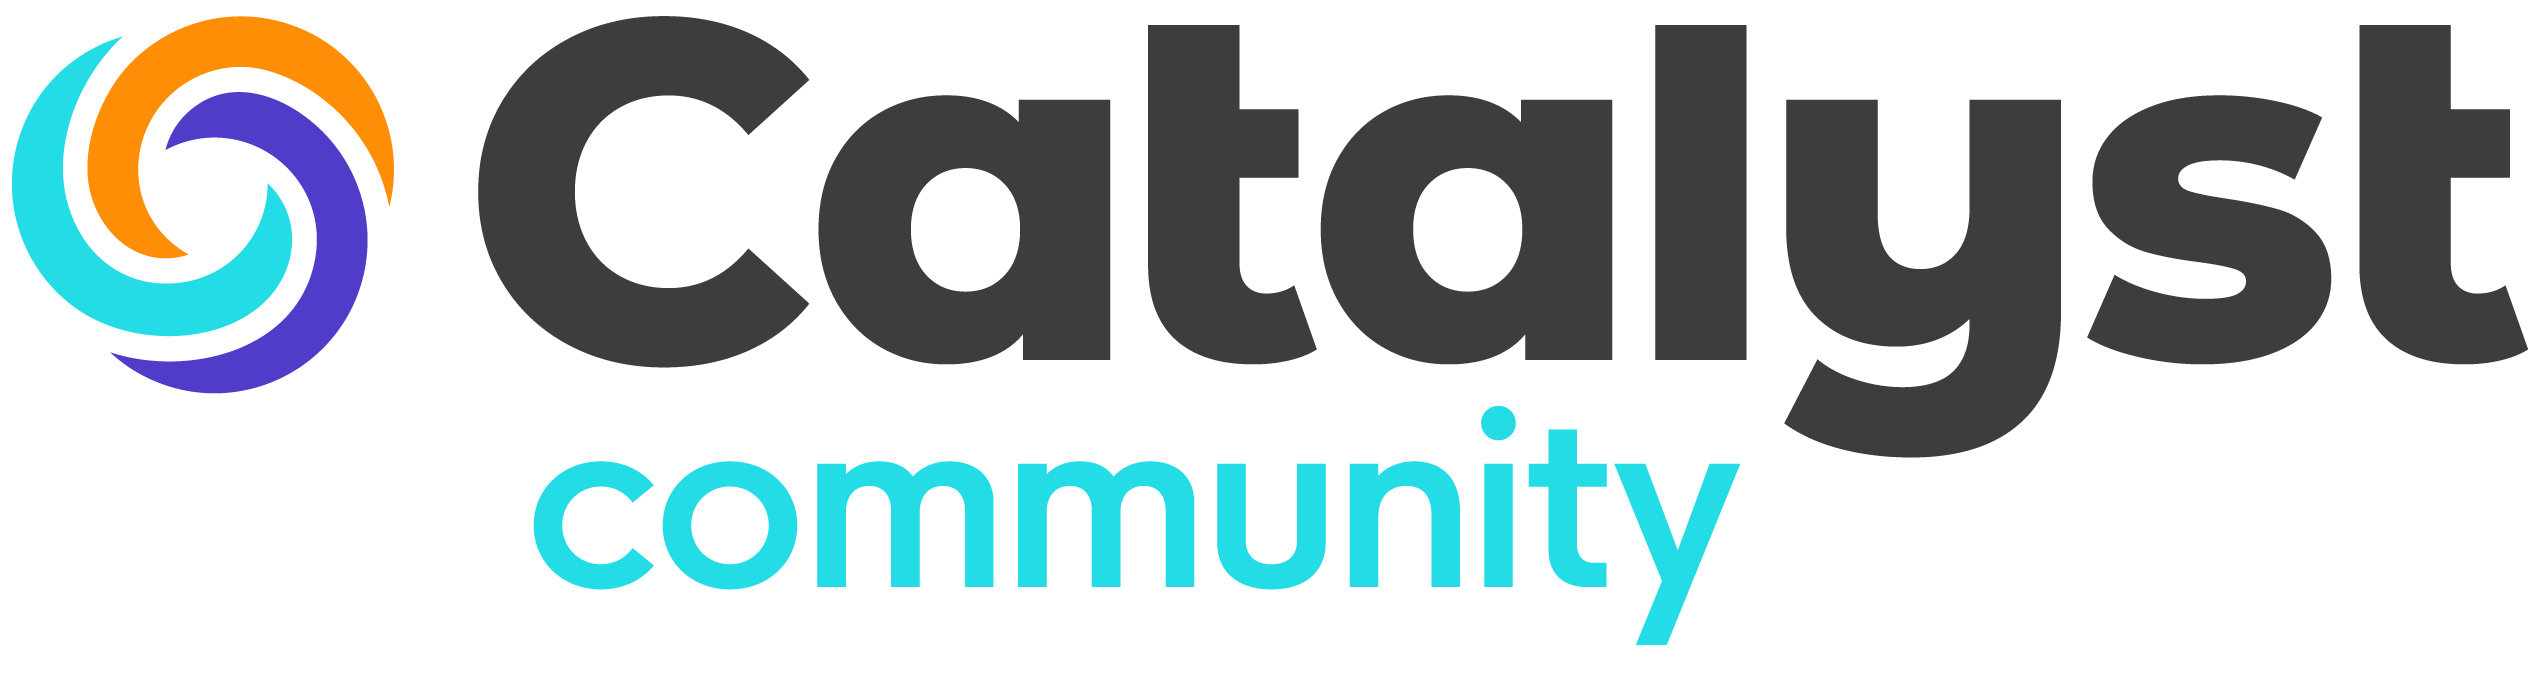 Catalyst Community